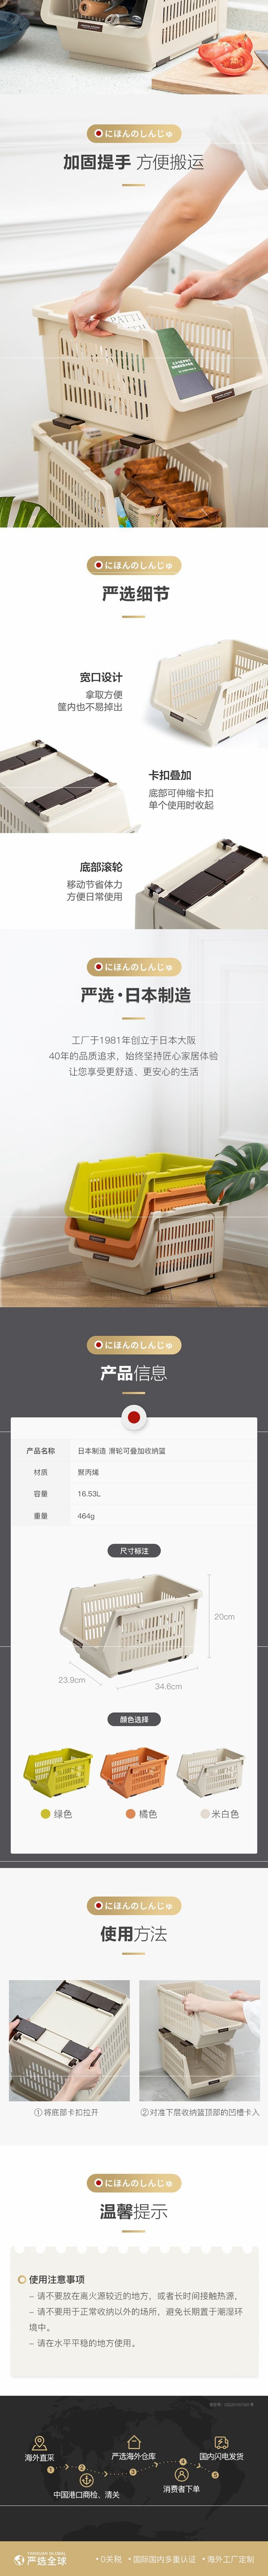 Lifease Made in Japanstackable multi-purpose storage basket beige-2 pcs